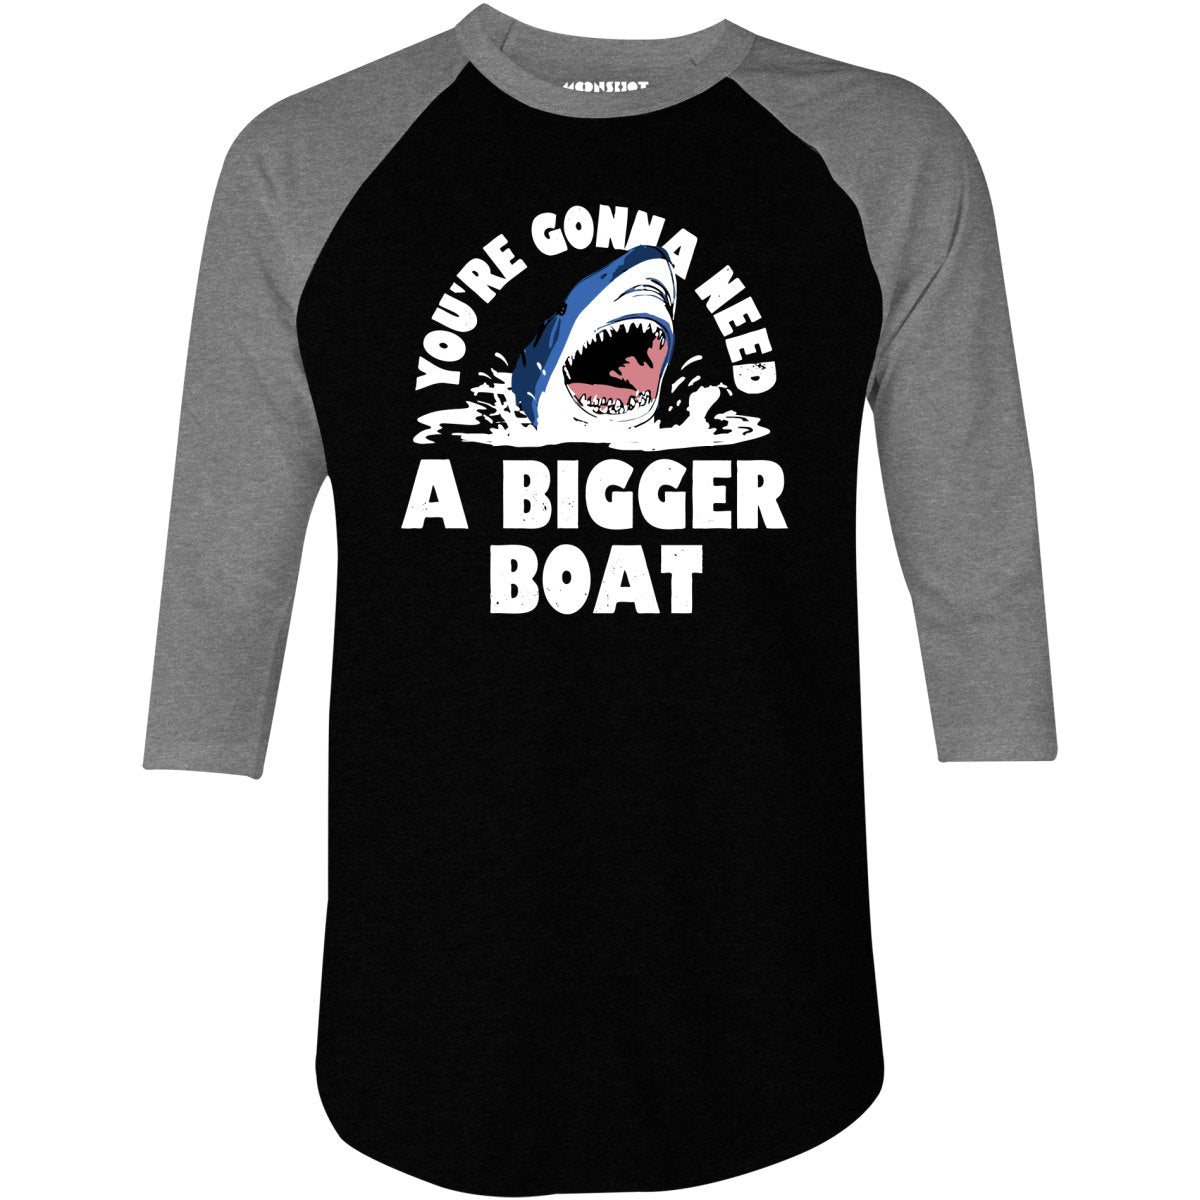 You're Gonna Need A Bigger boat - 3/4 Sleeve Raglan T-Shirt